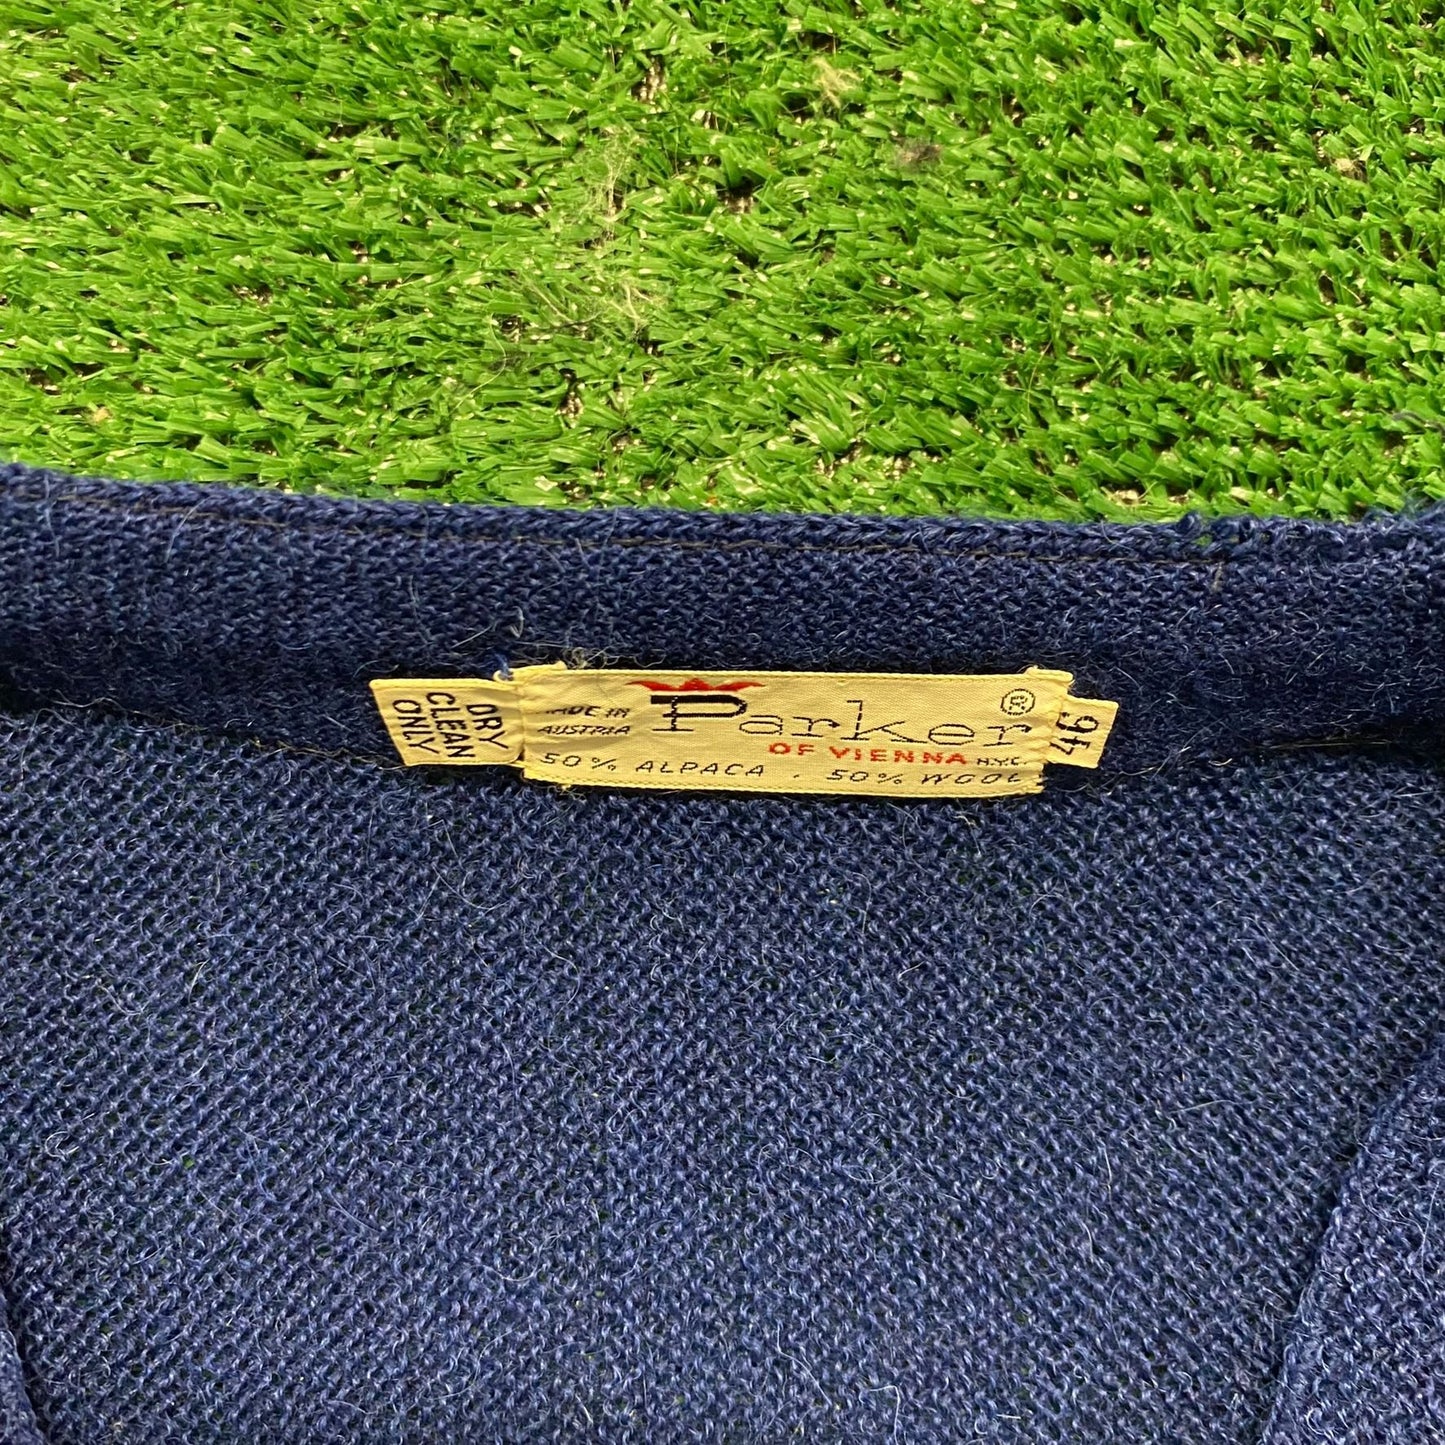 Navy Blue Vintage 1950s Alpaca Wool Knit Cardigan Sweater